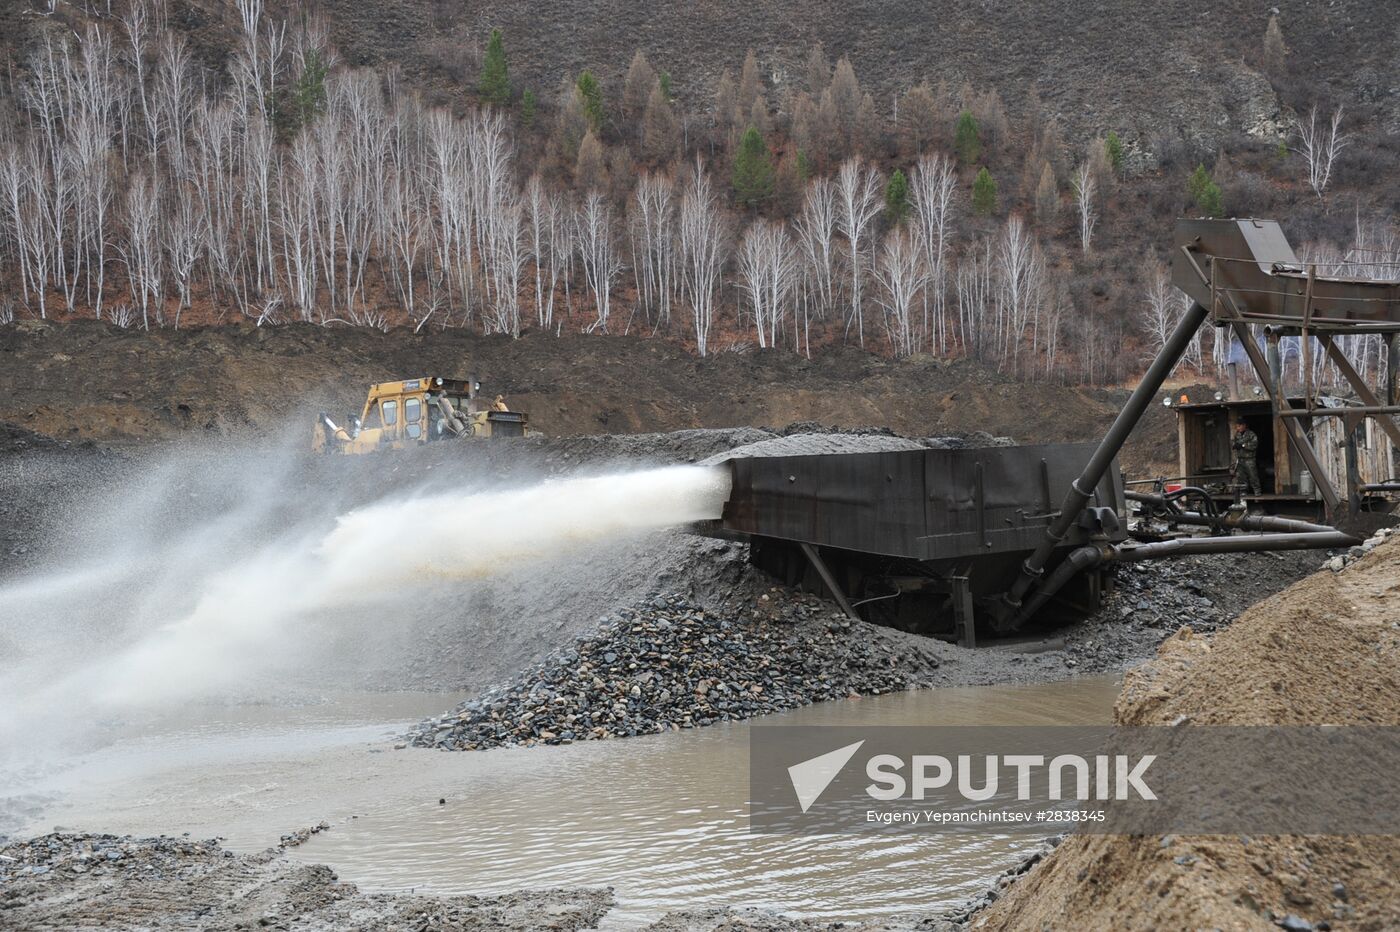 Gold mining in Trans-Baikal Territory